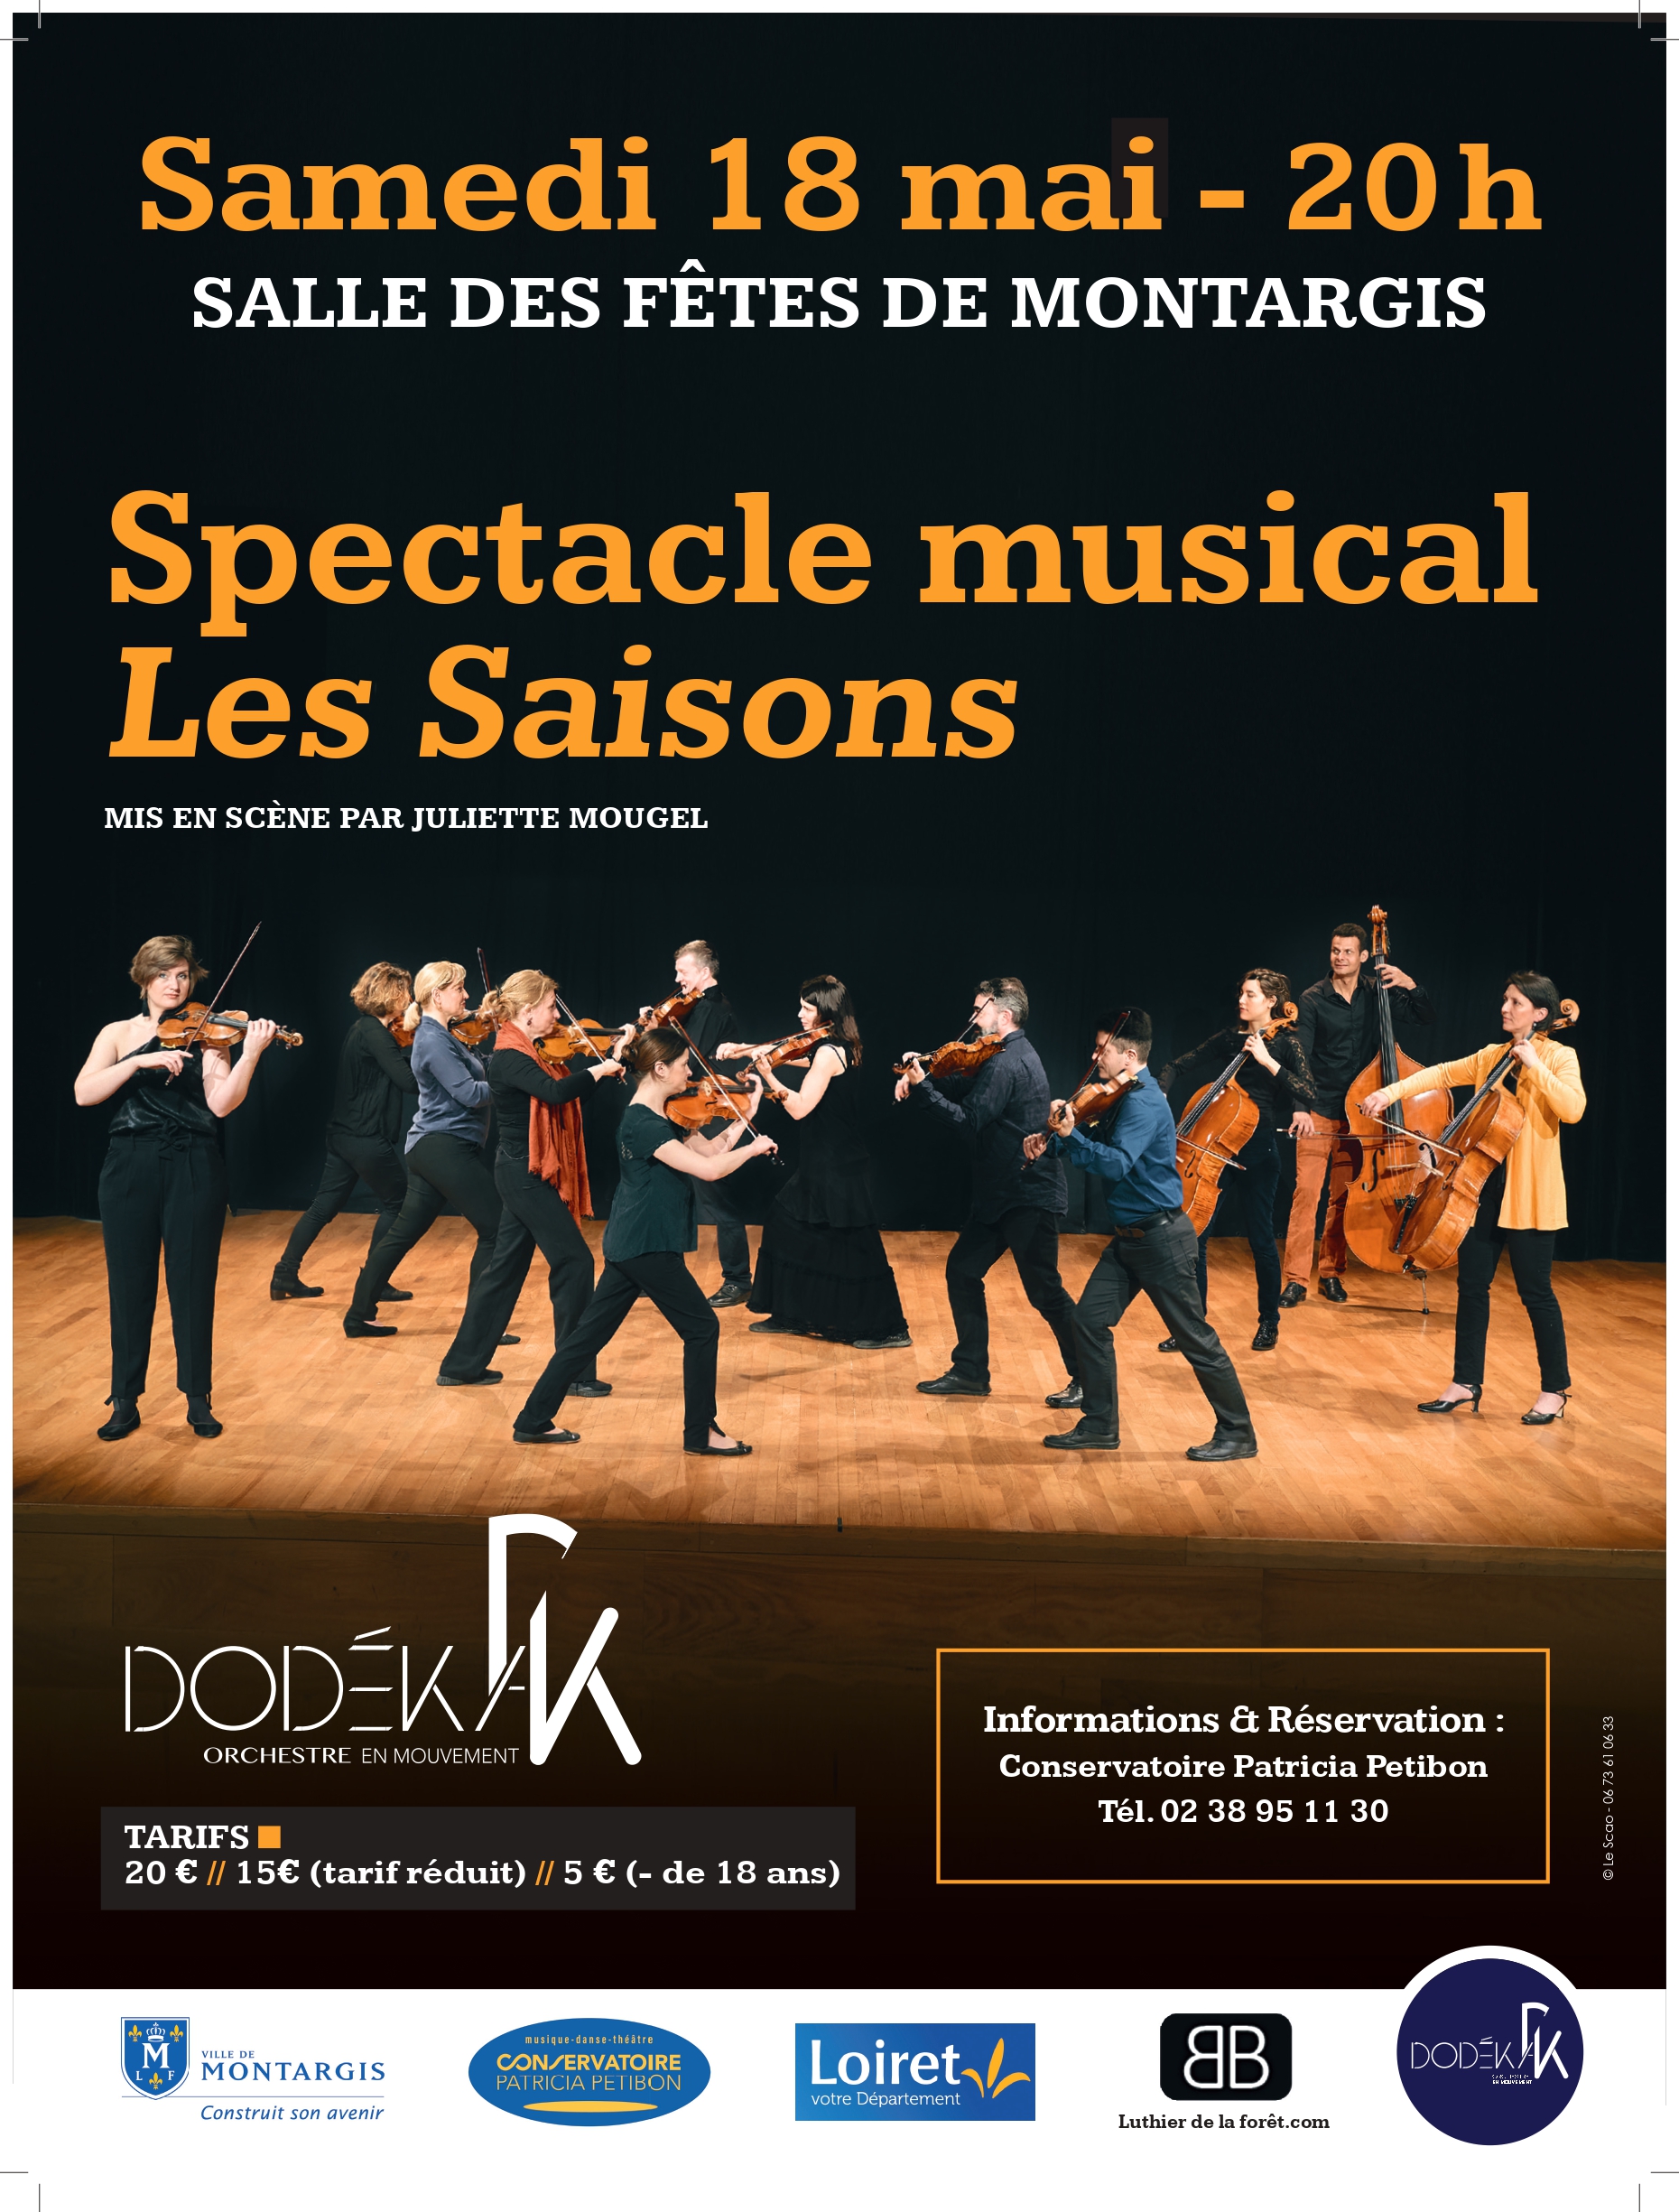 Spectacle musical Les Saisons